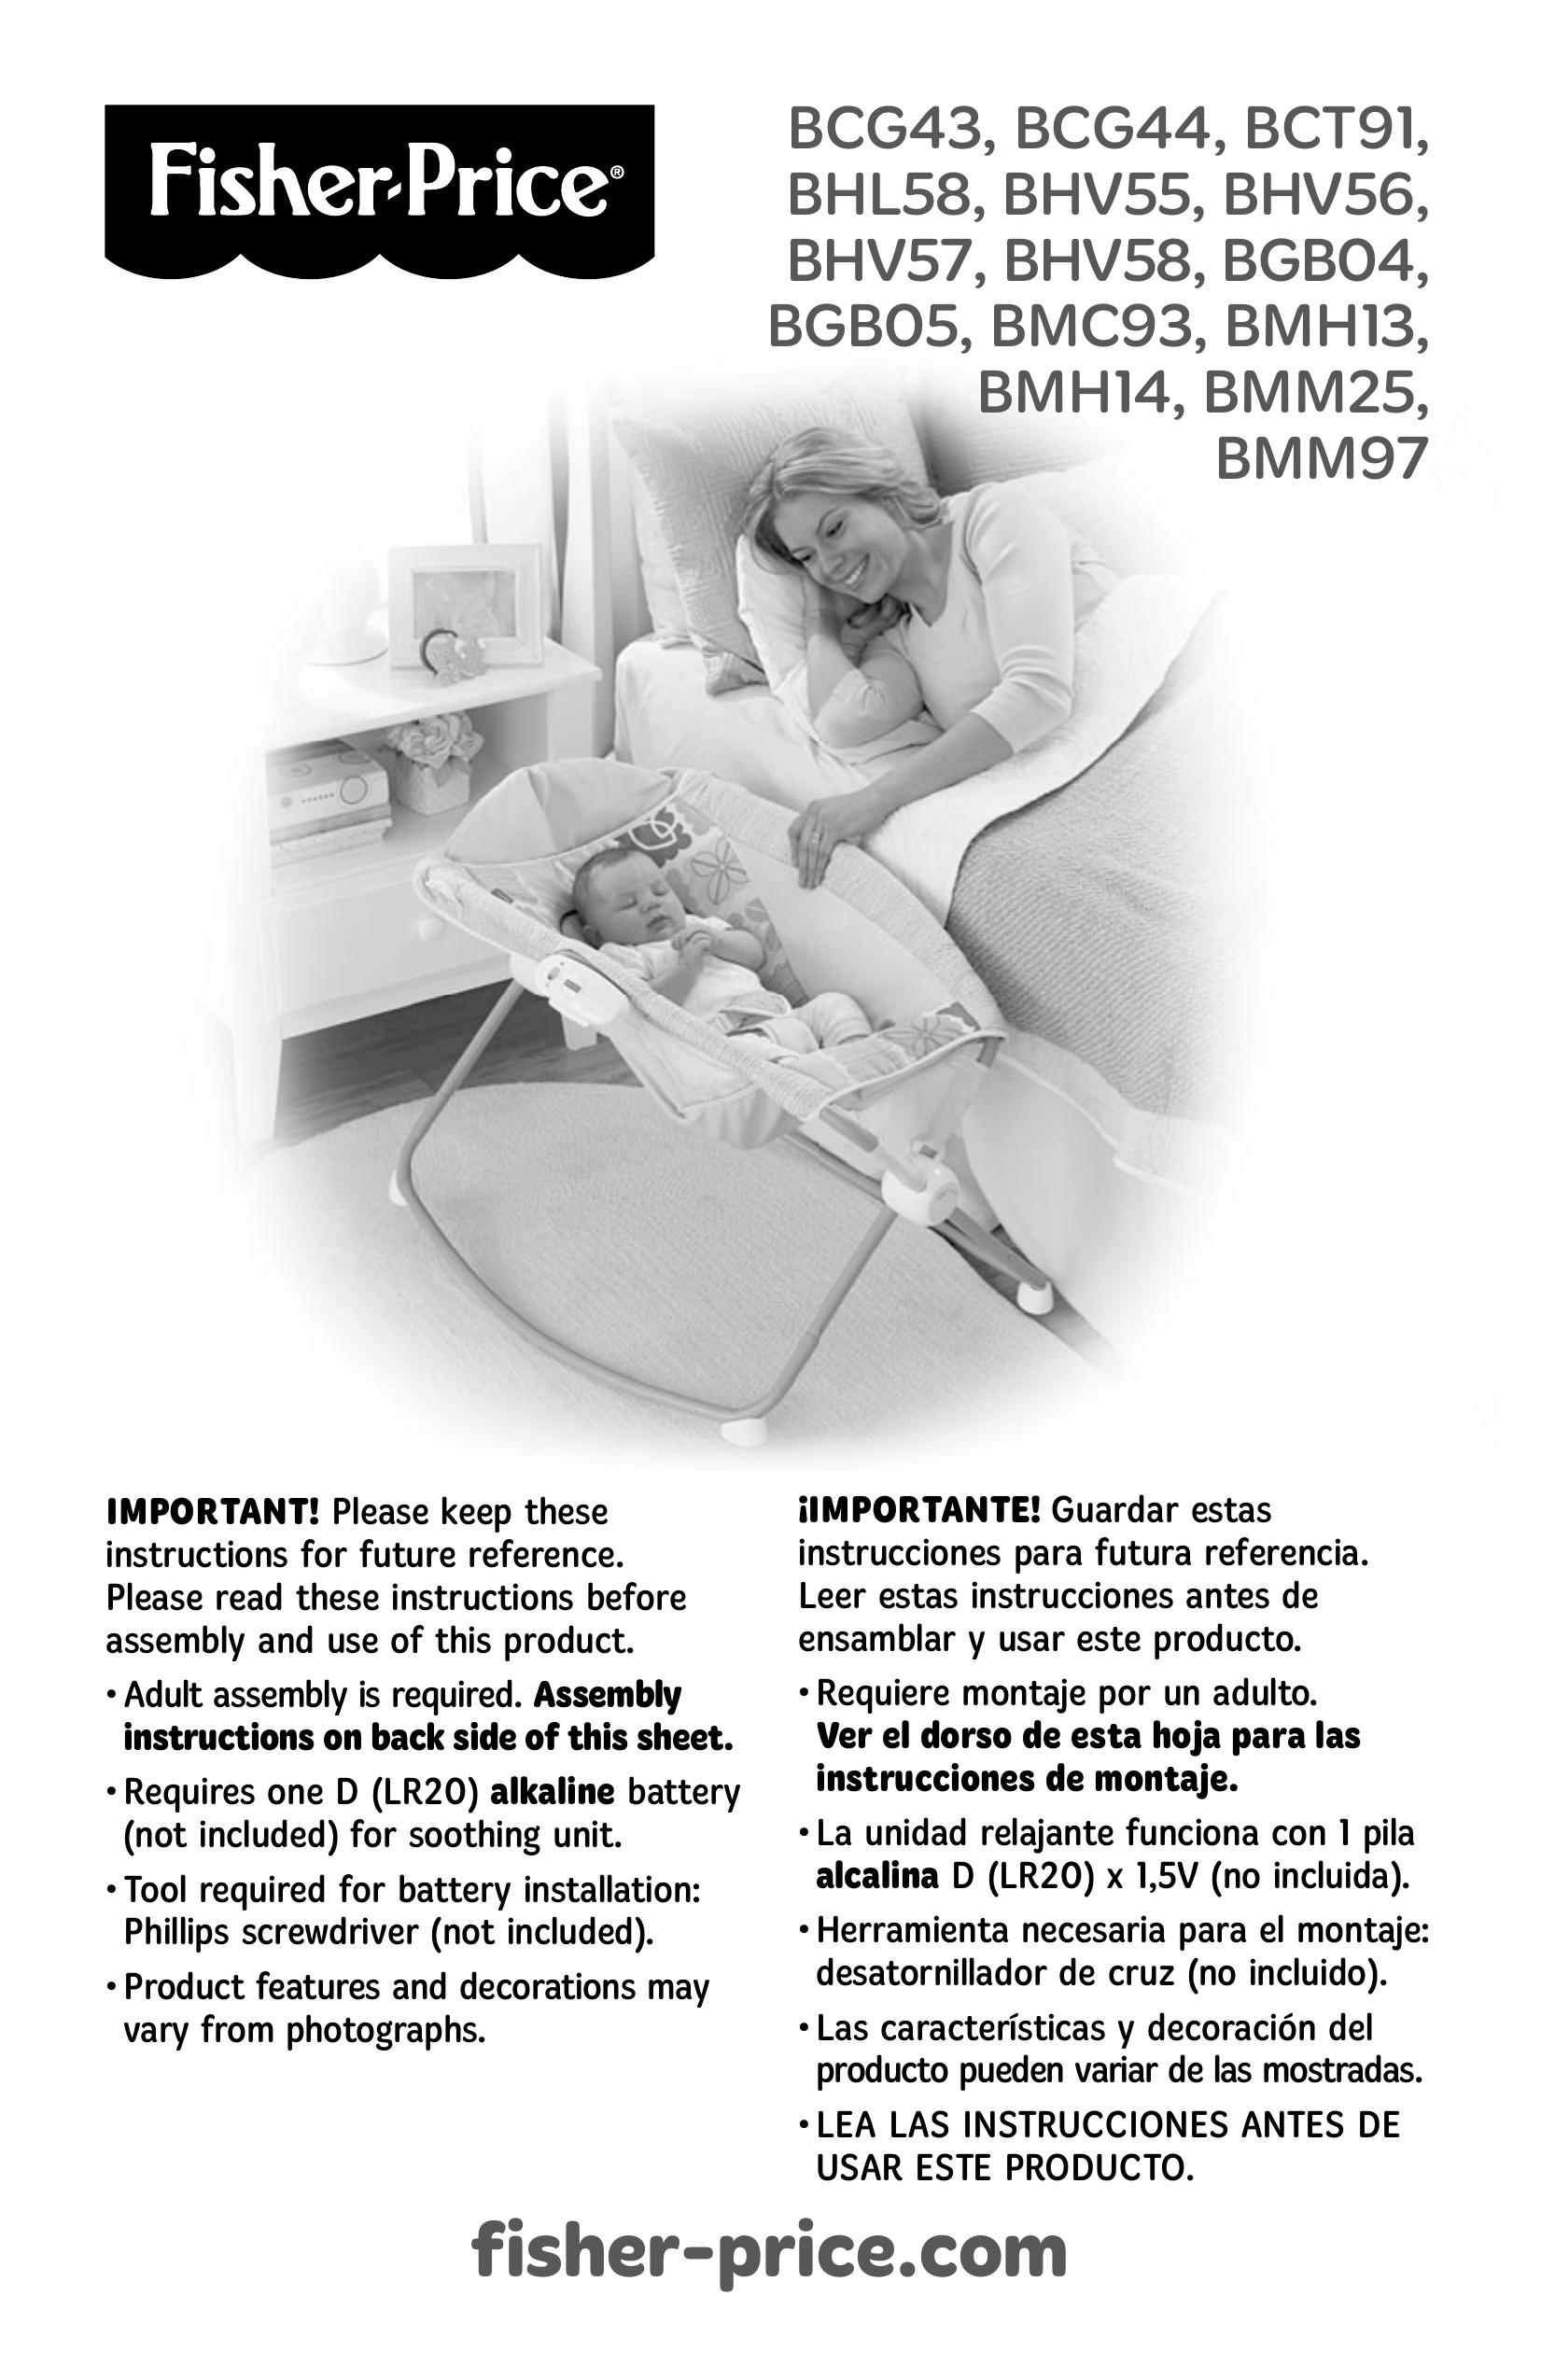 Fisher-Price BCG44 Sleep Apnea Machine User Manual